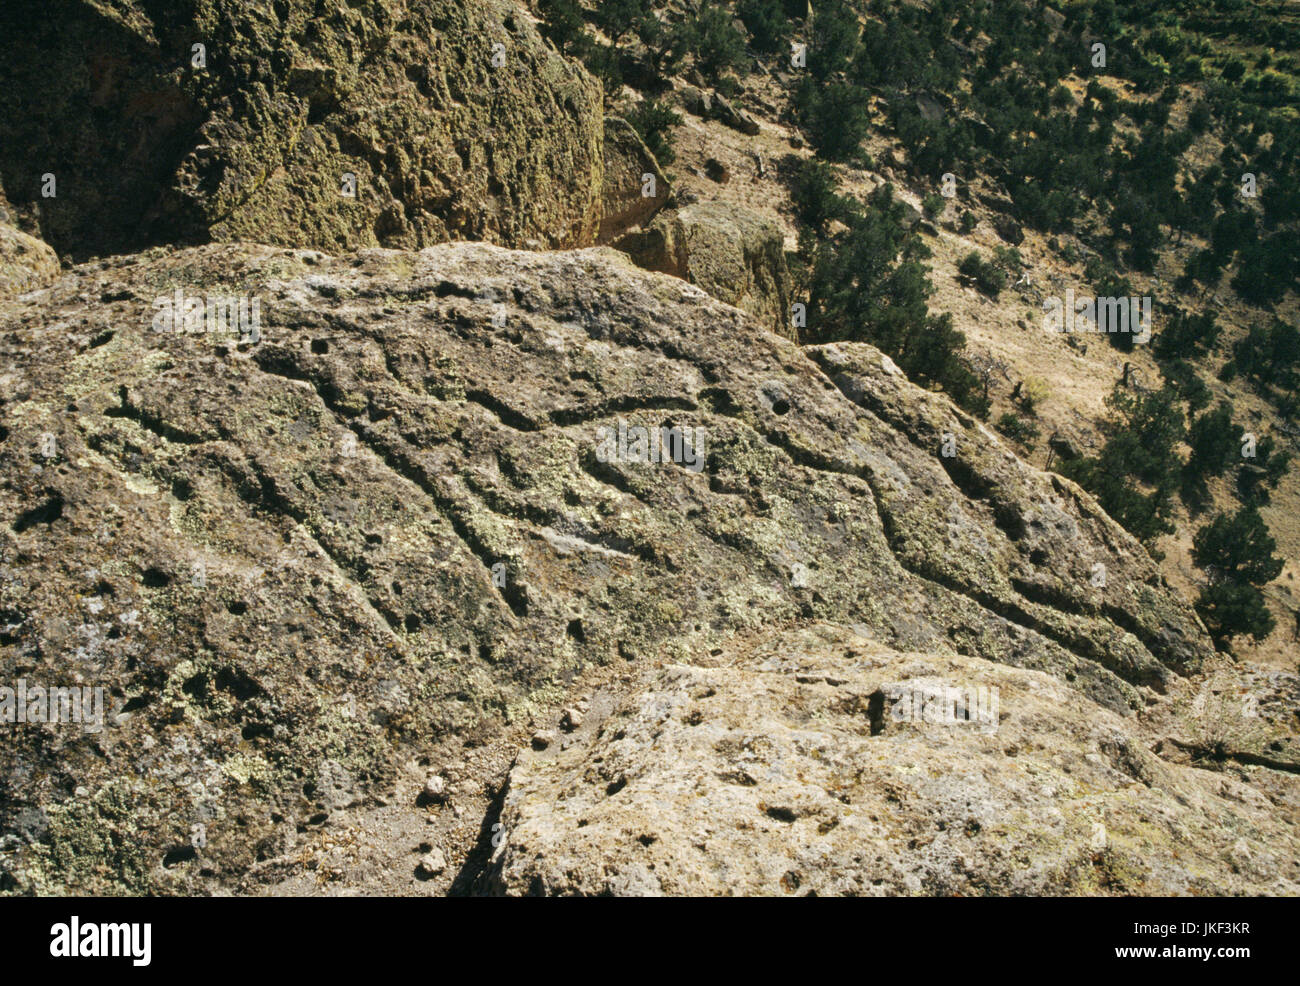 Felsen-Kunst/Petroglyphen bei Tsi Ping ruiniert Pueblo, MGH, Abiquiu, Rio Arriba County, New Mexico, USA. Schlange oder Wasser Symbole pickte in den Tuff-Felsen Stockfoto